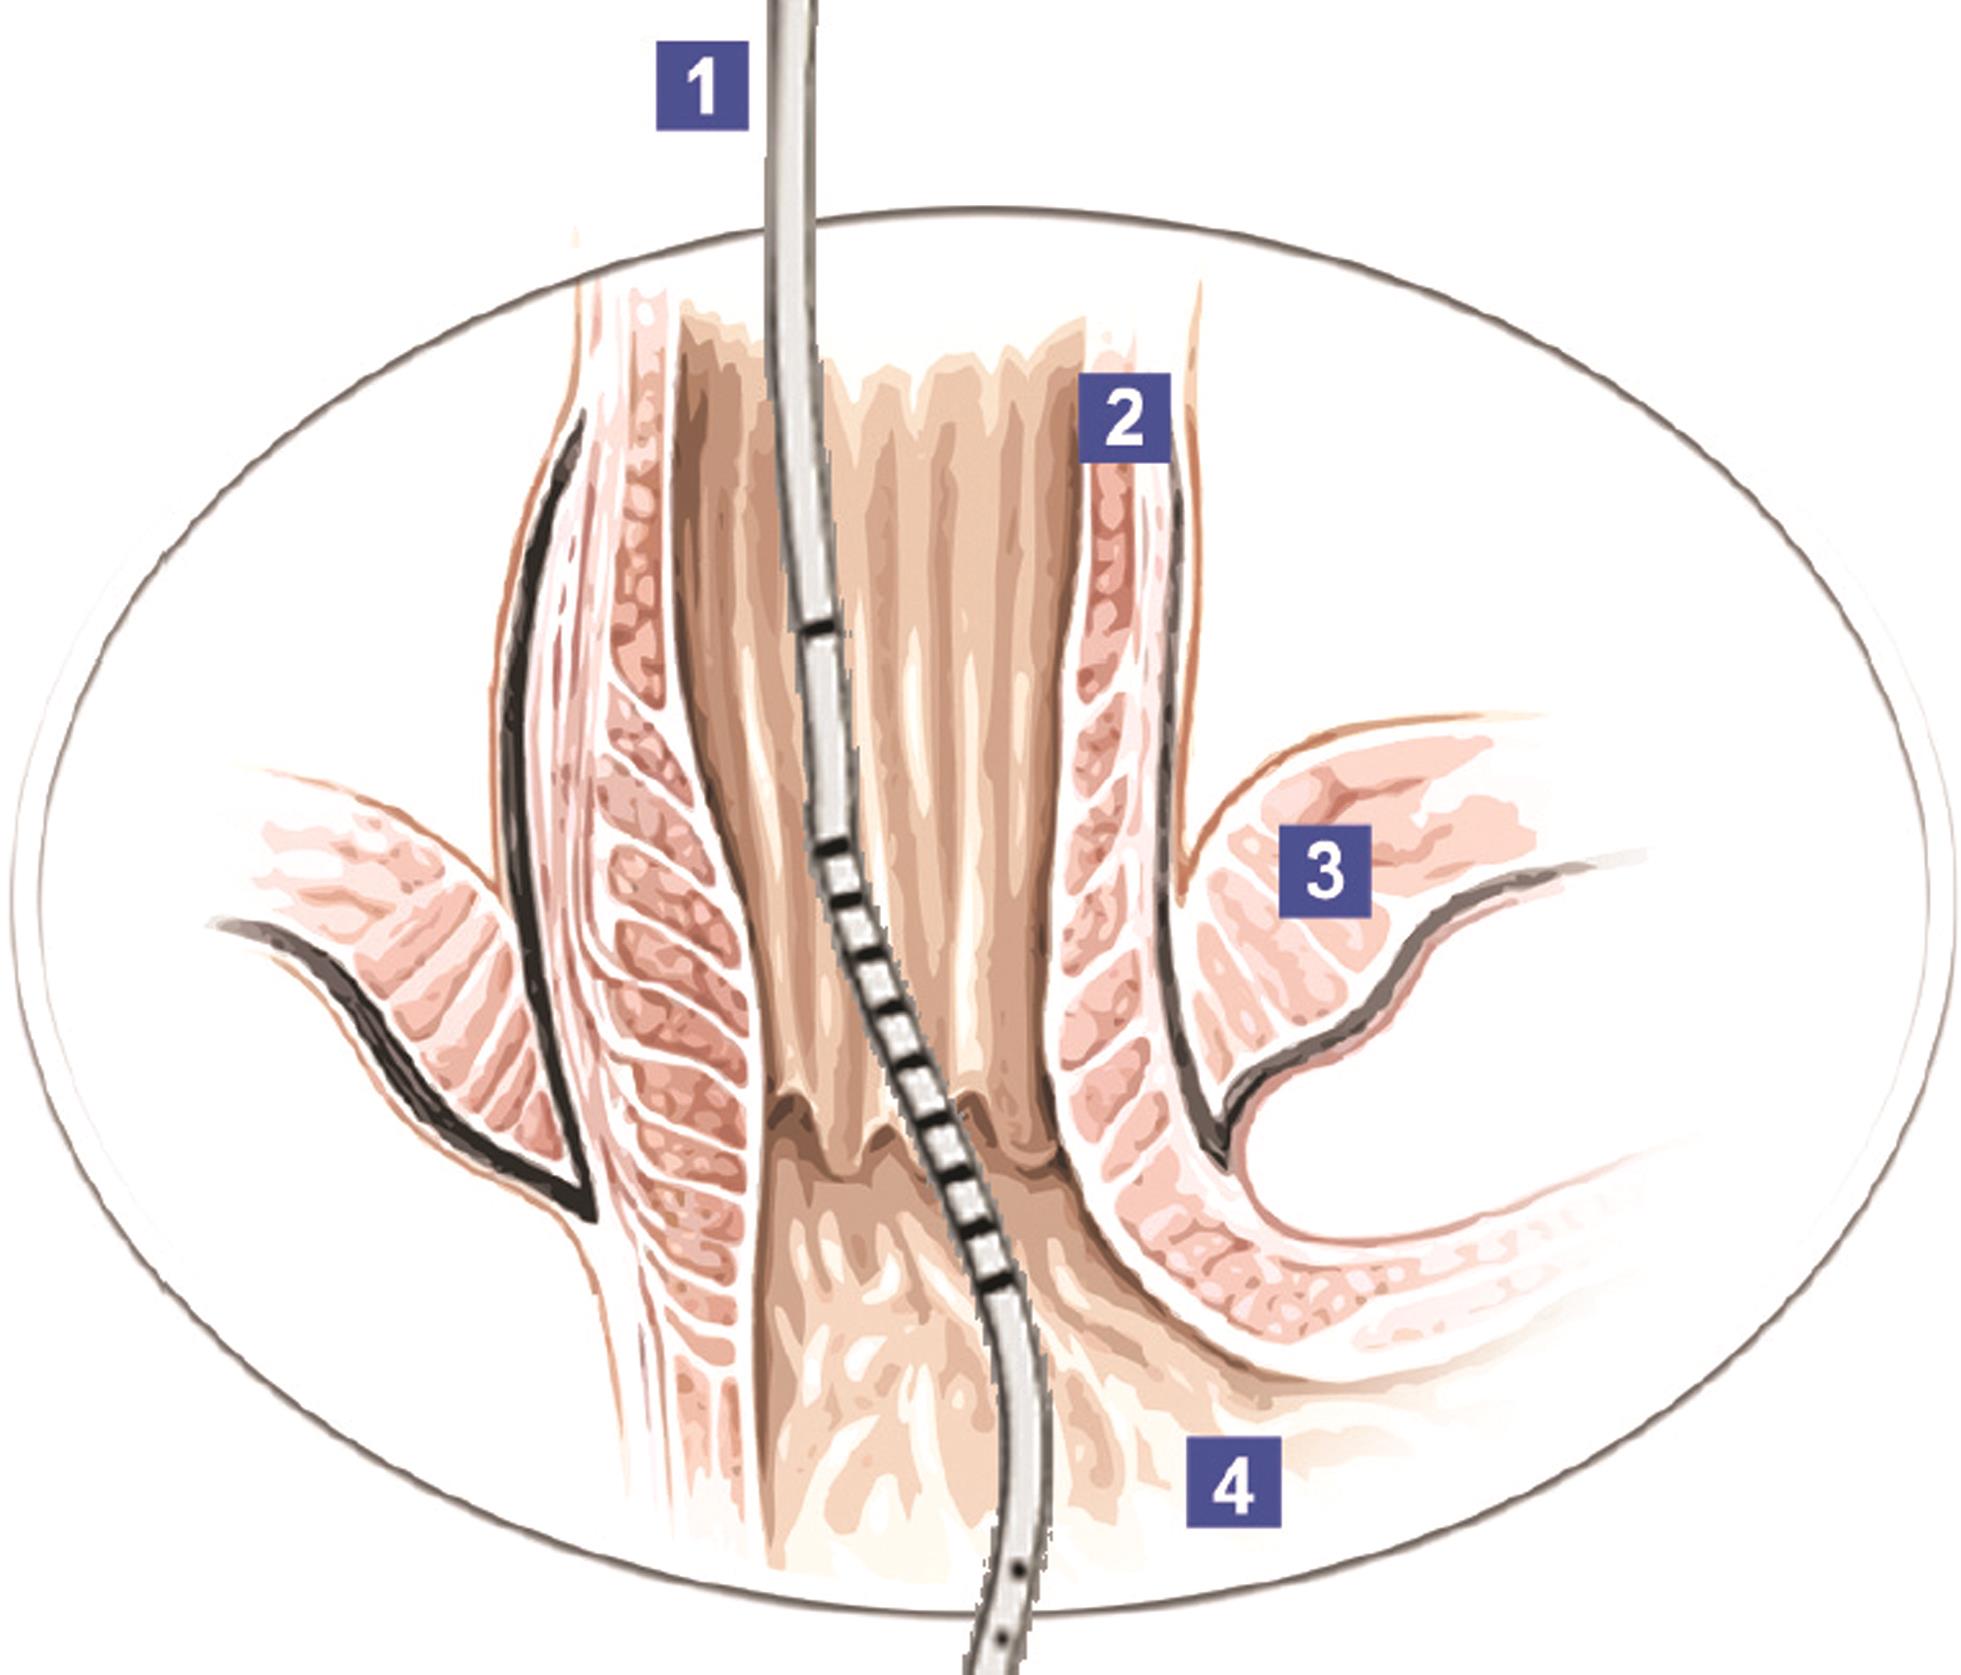 Edi catheter in relation to diaphragm. 